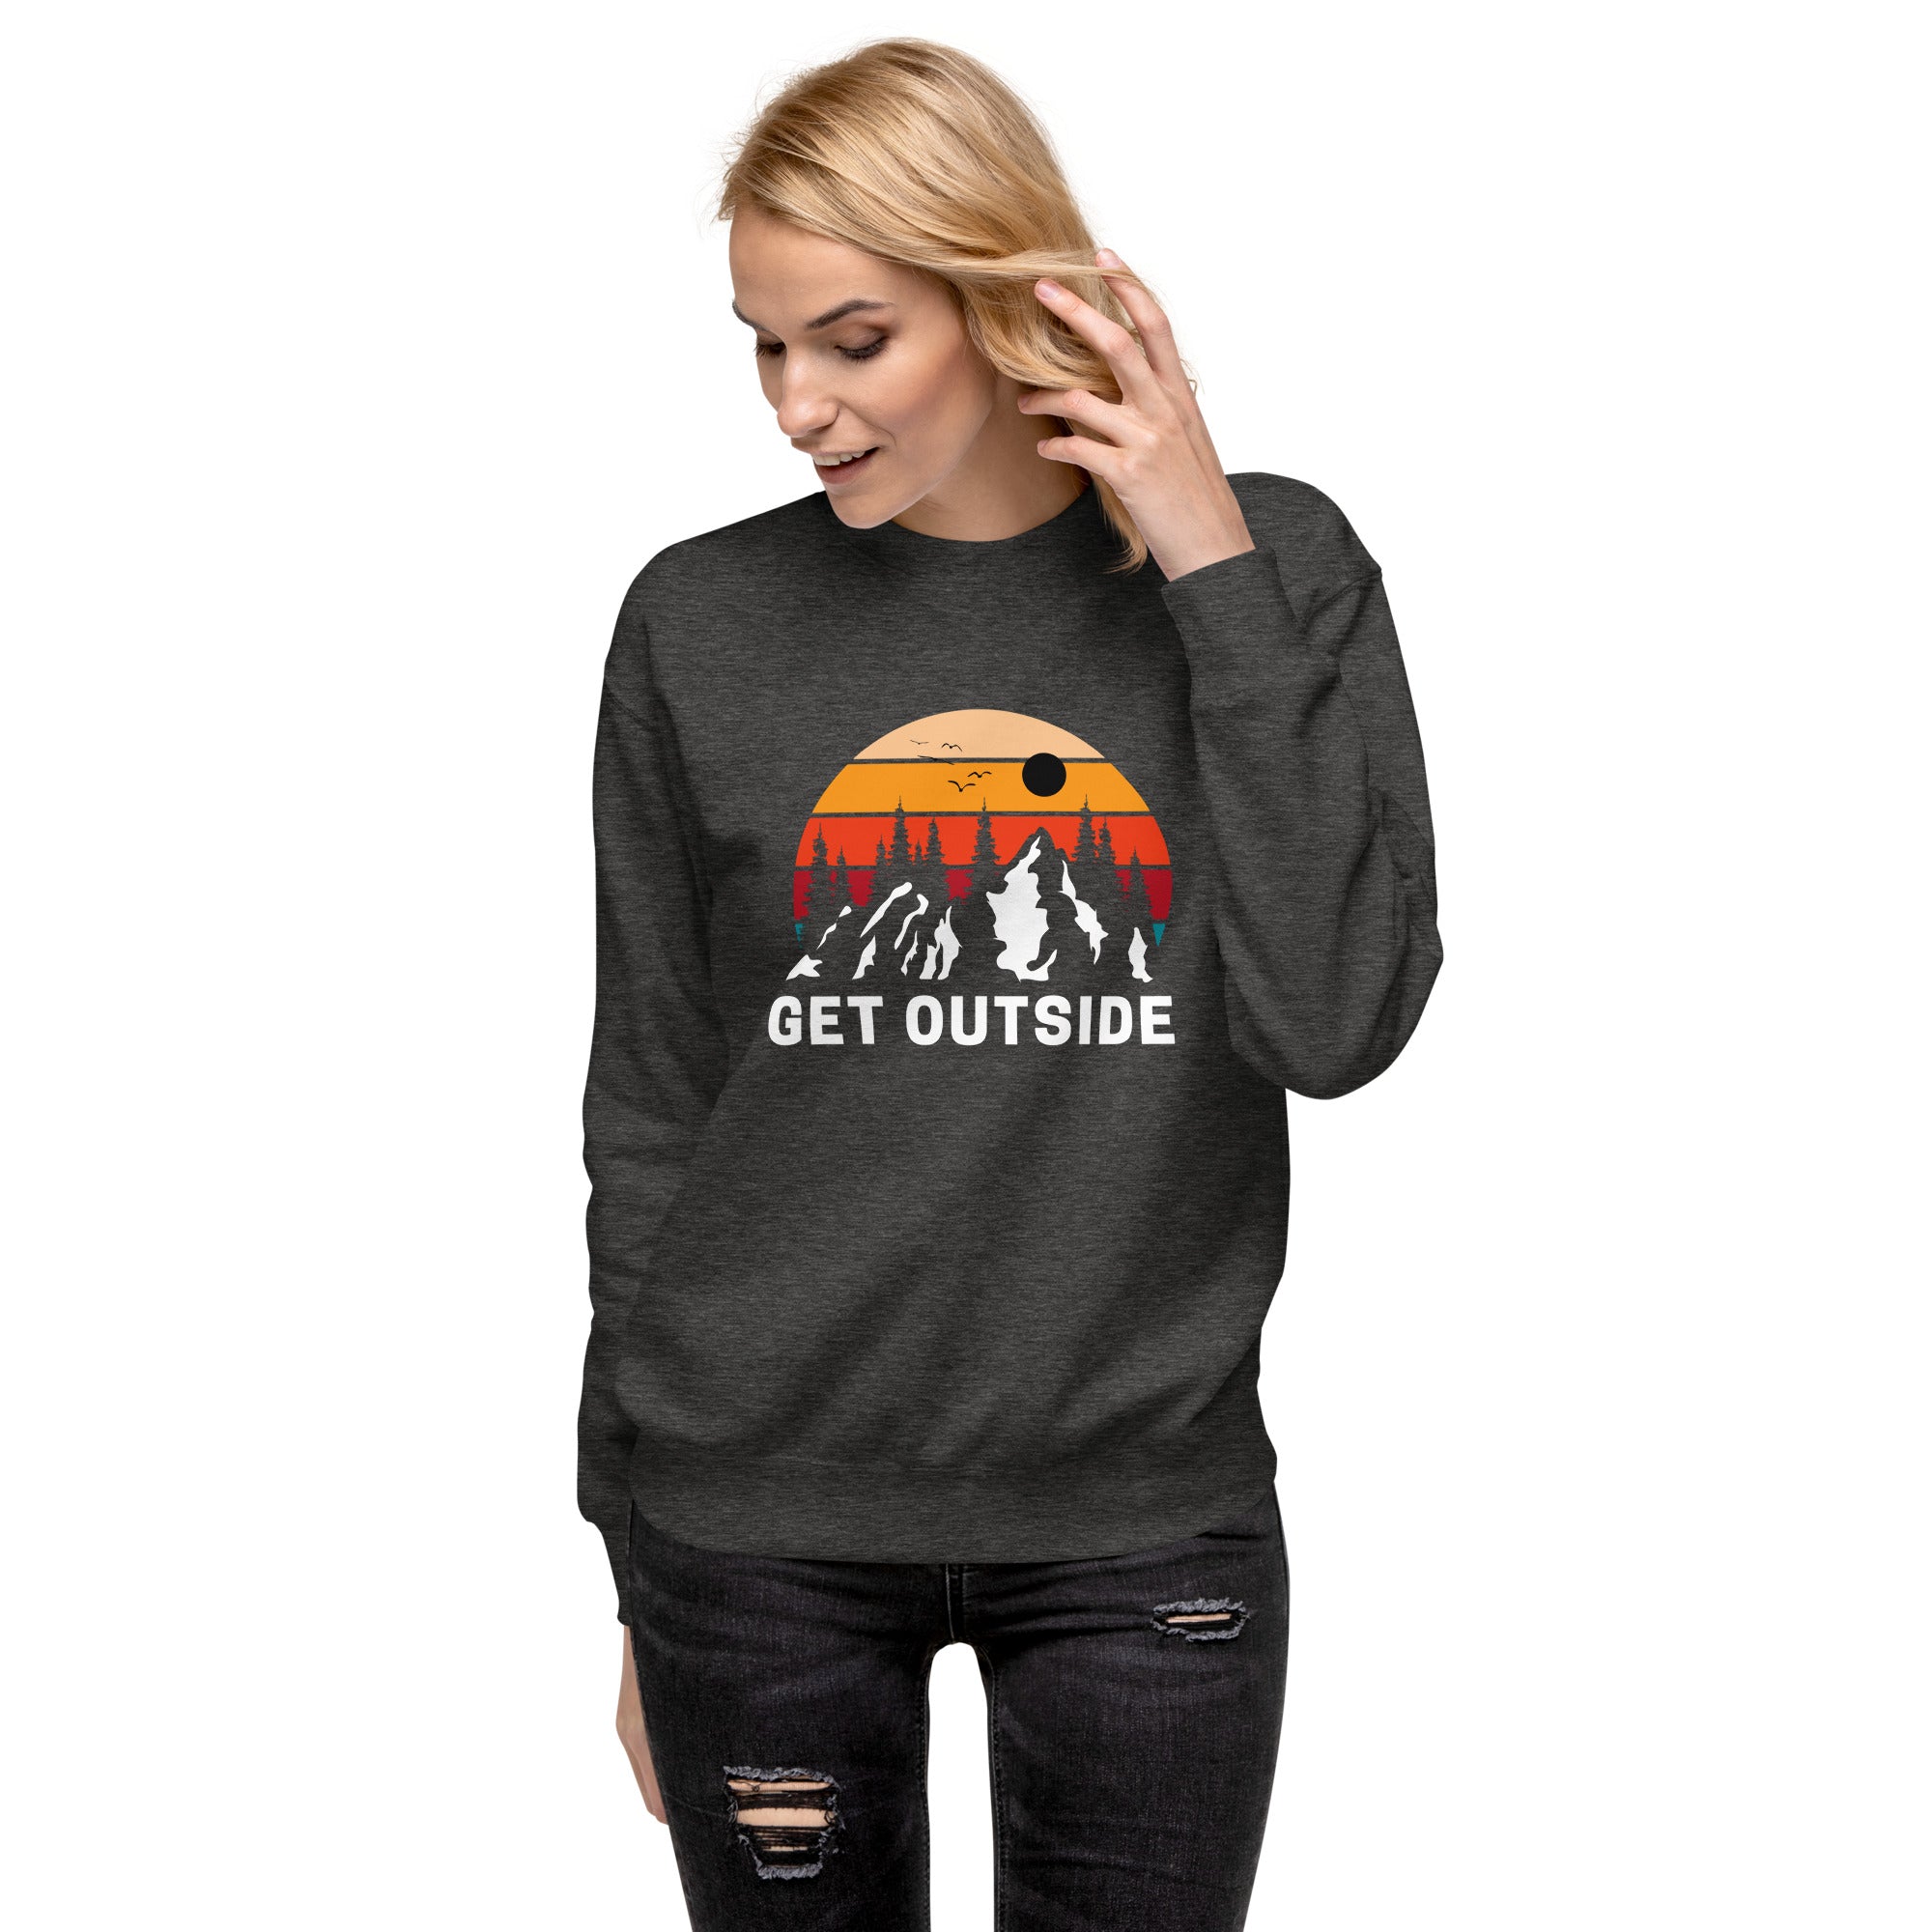 Get Outside Women's Premium Sweatshirt